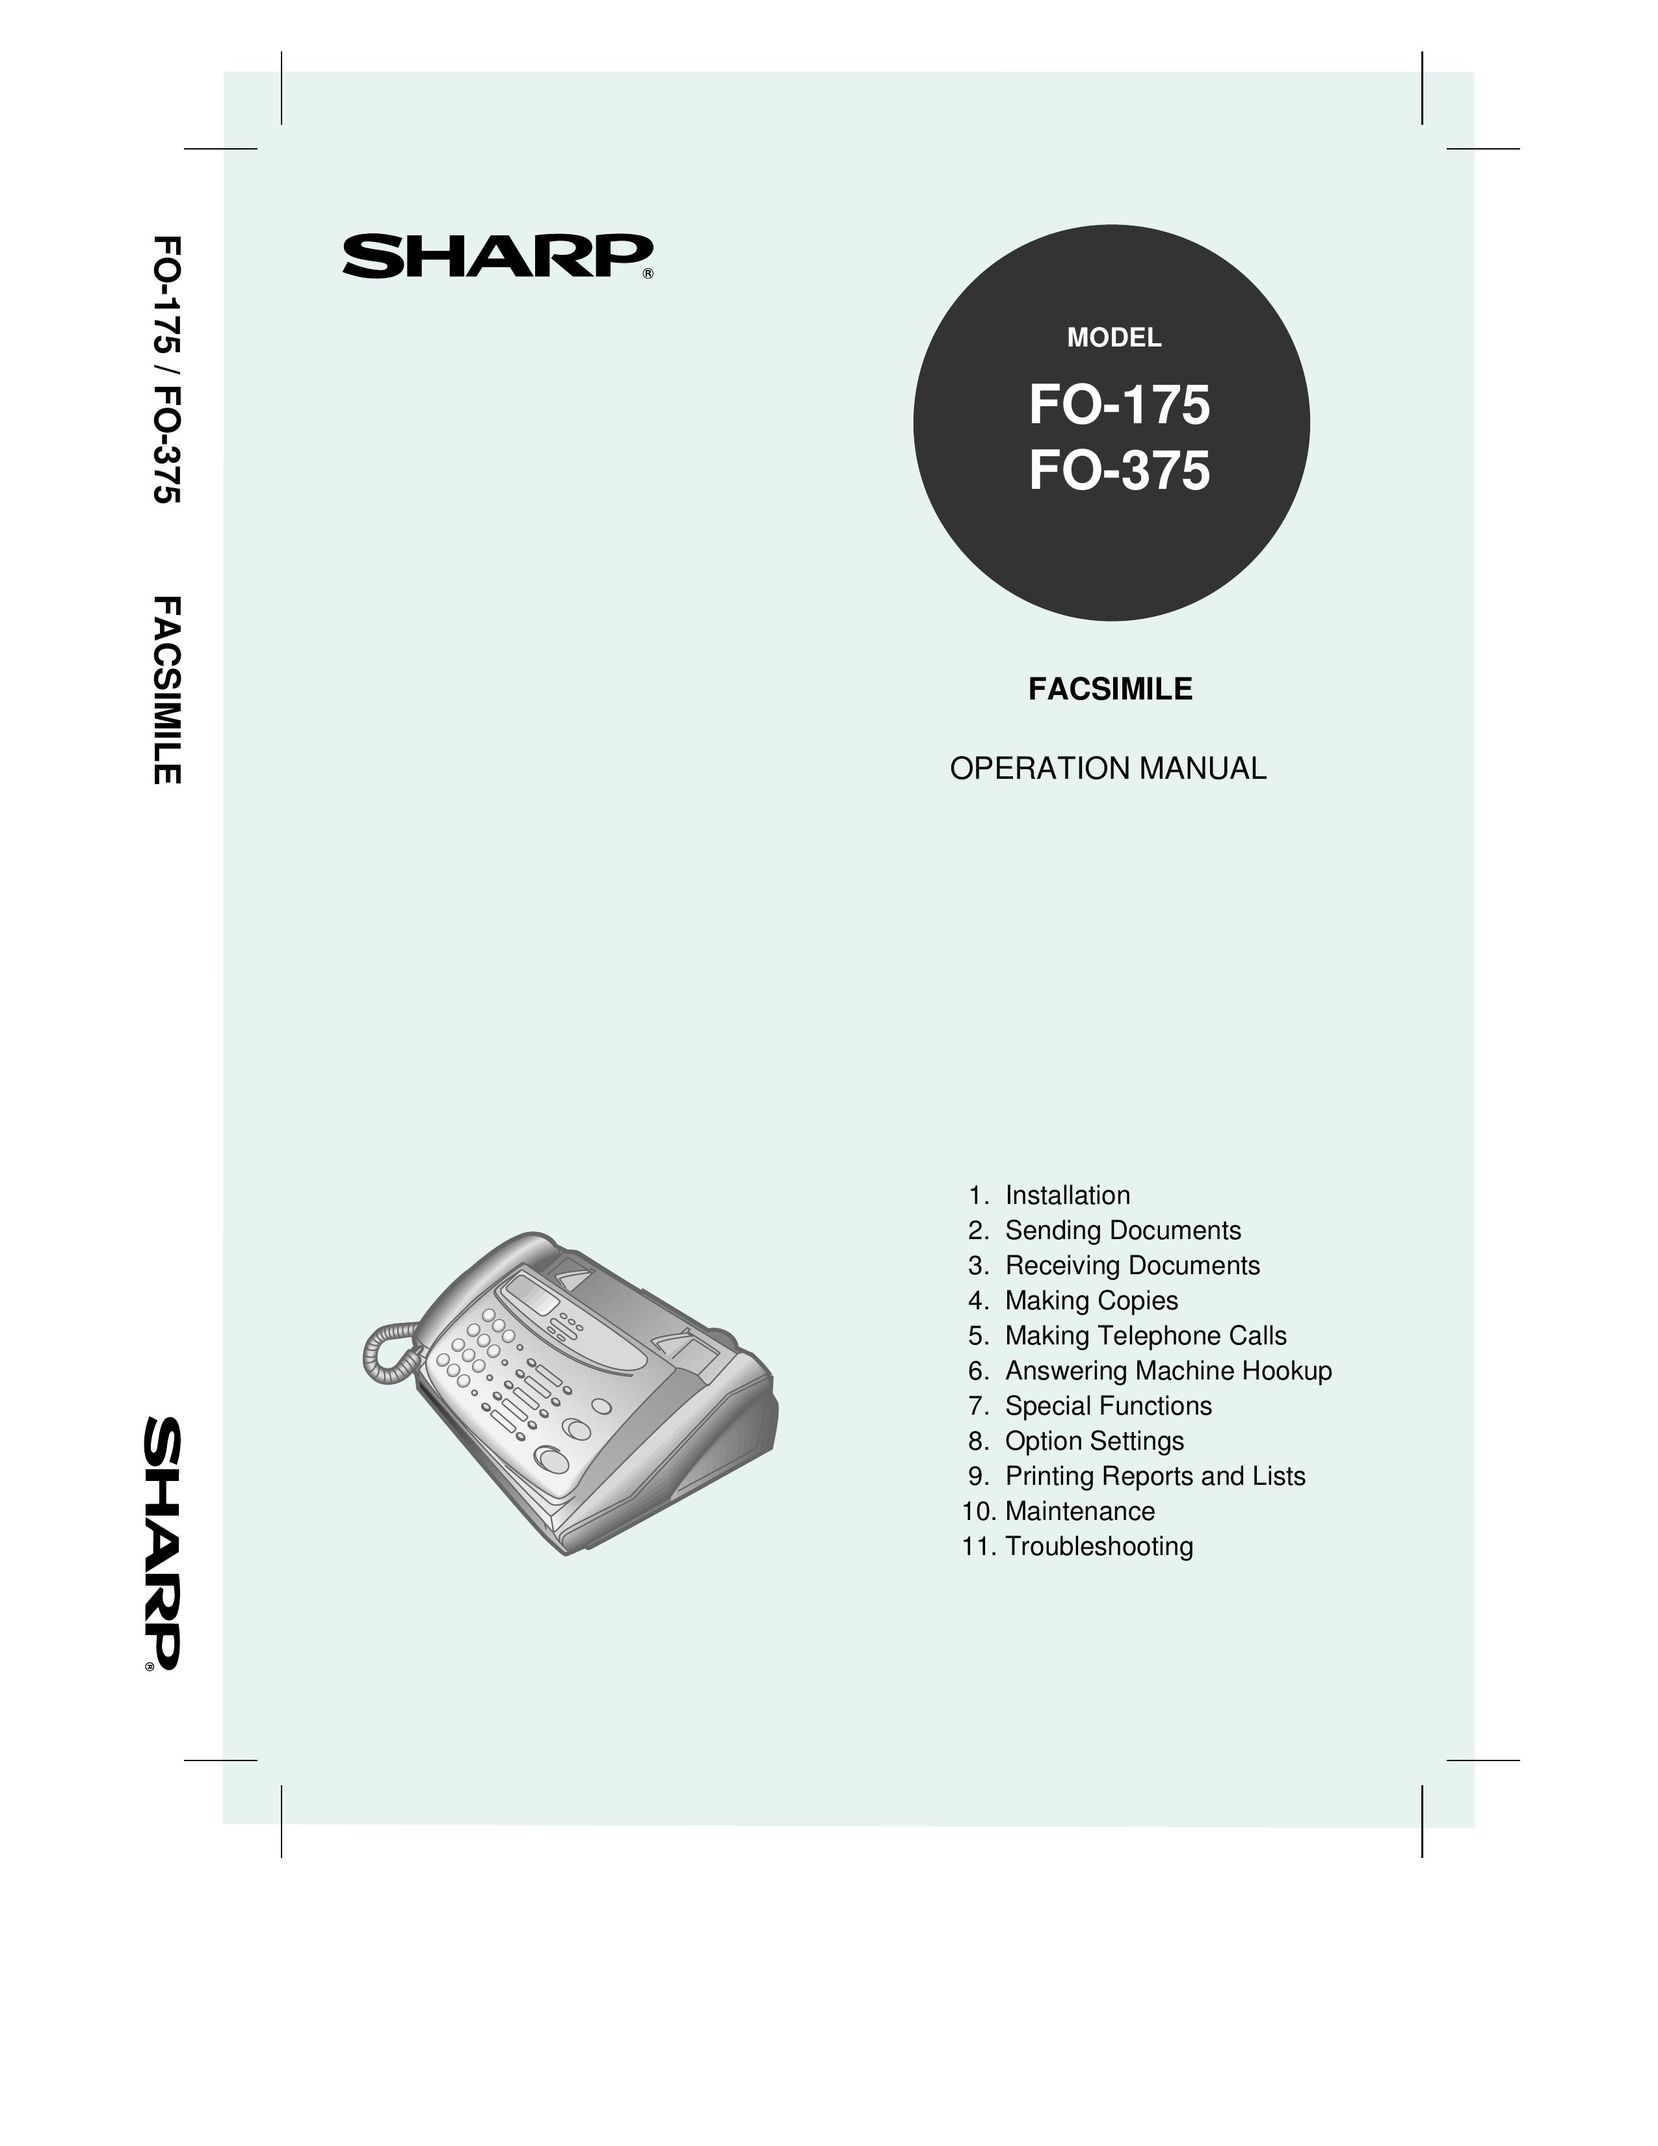 Sharp FO-375 Fax Machine User Manual